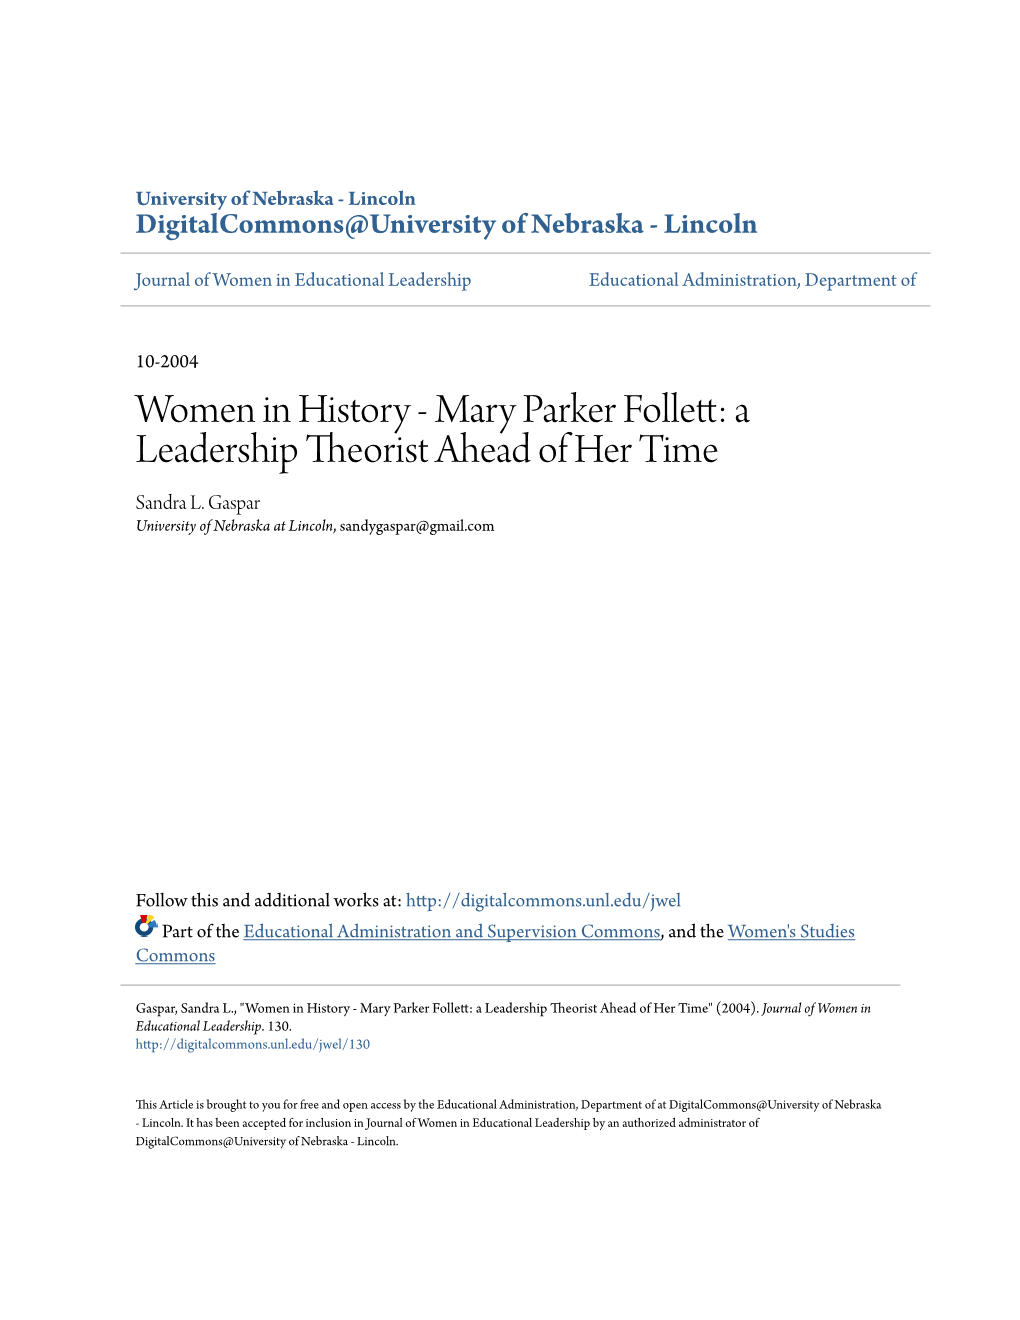 Mary Parker Follett: a Leadership Theorist Ahead of Her Time Sandra L